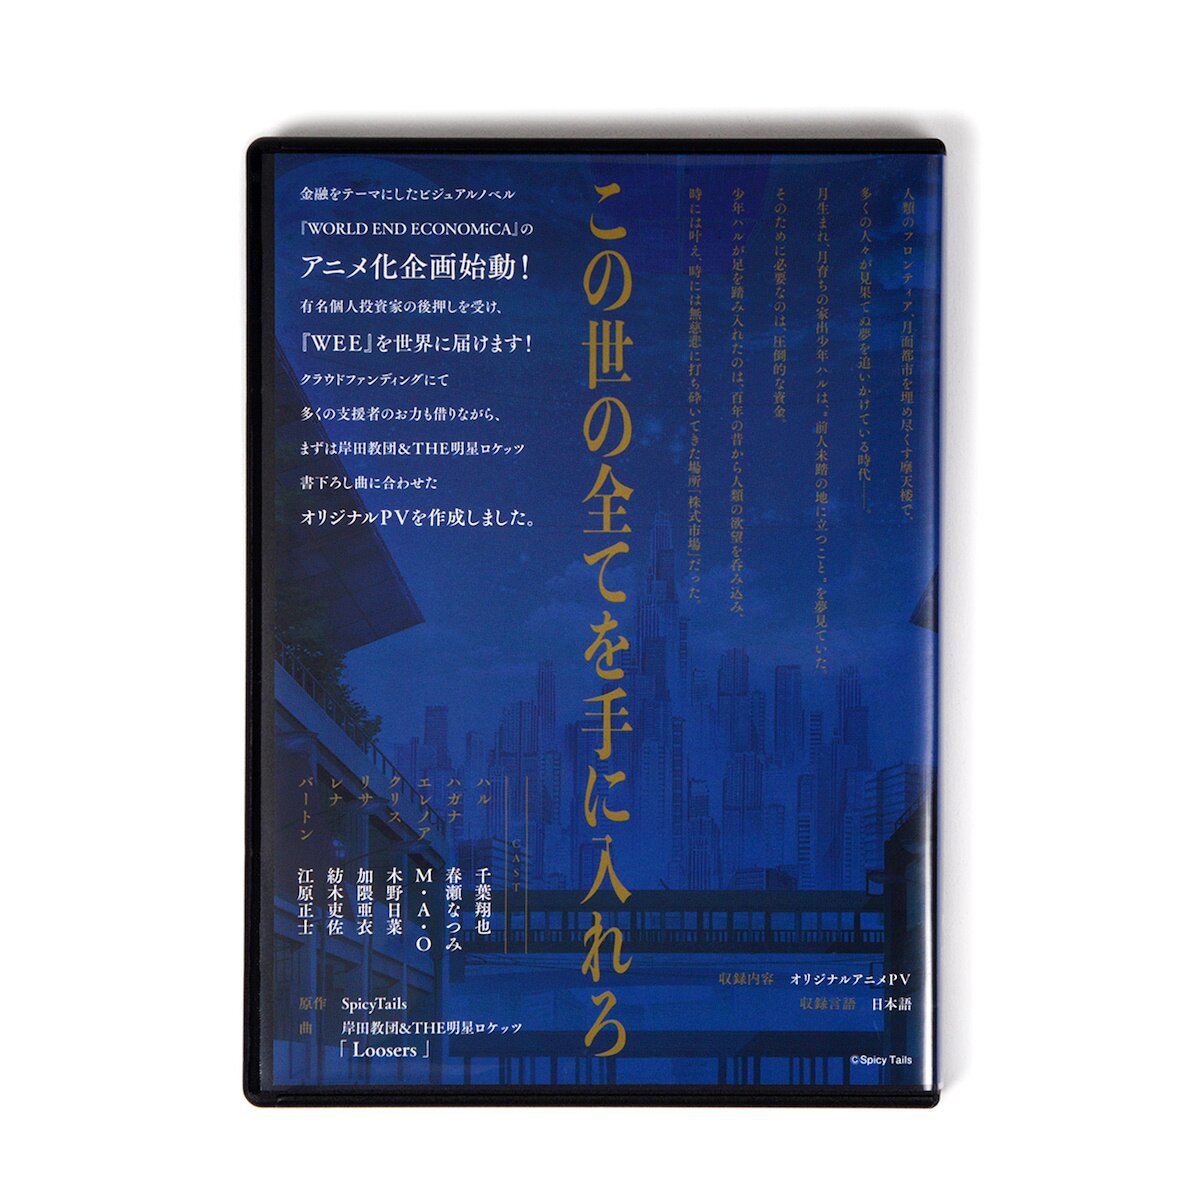 WORLD END ECONOMiCA Art Book - Tokyo Otaku Mode (TOM)